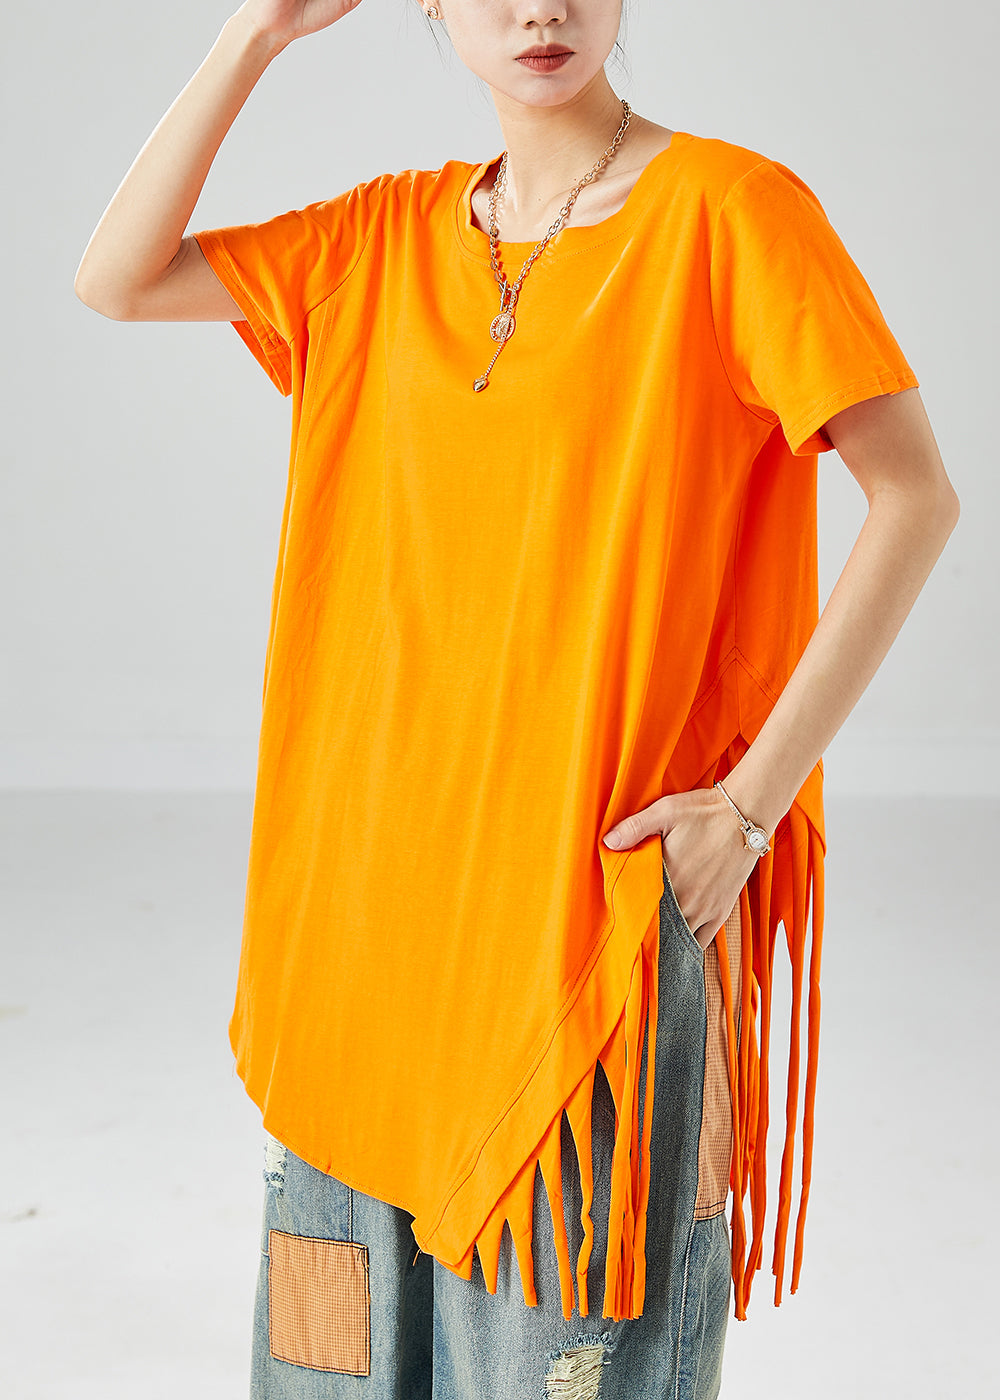 Art Orange Asymmetrical Tassel Cotton Tank Tops Summer LY6073 - fabuloryshop